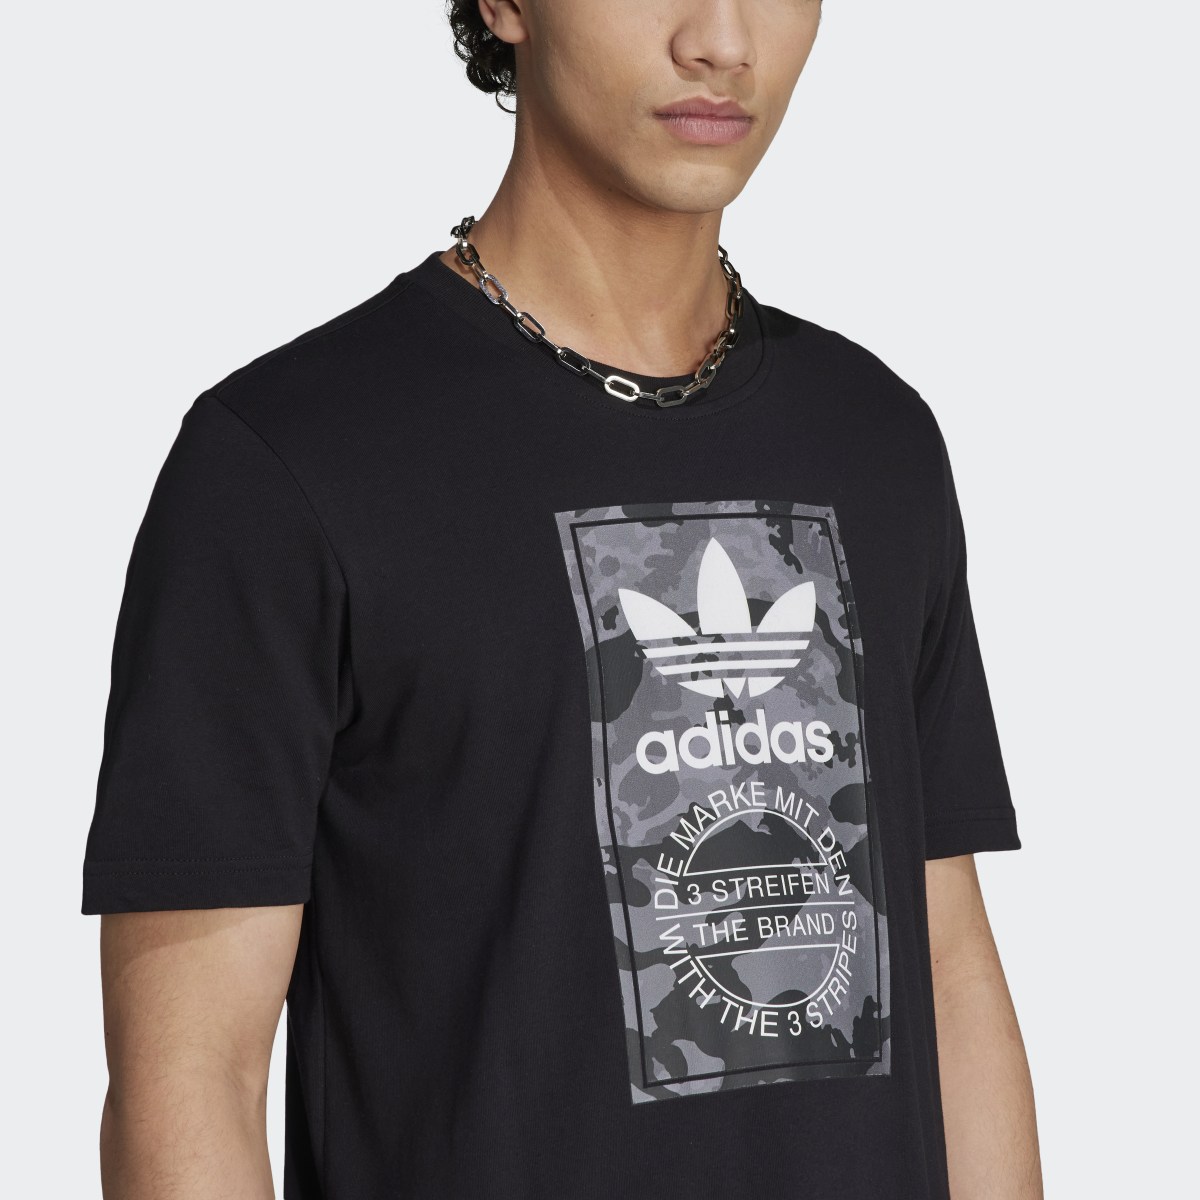 Adidas Camiseta Graphics Camo Tongue Label. 6